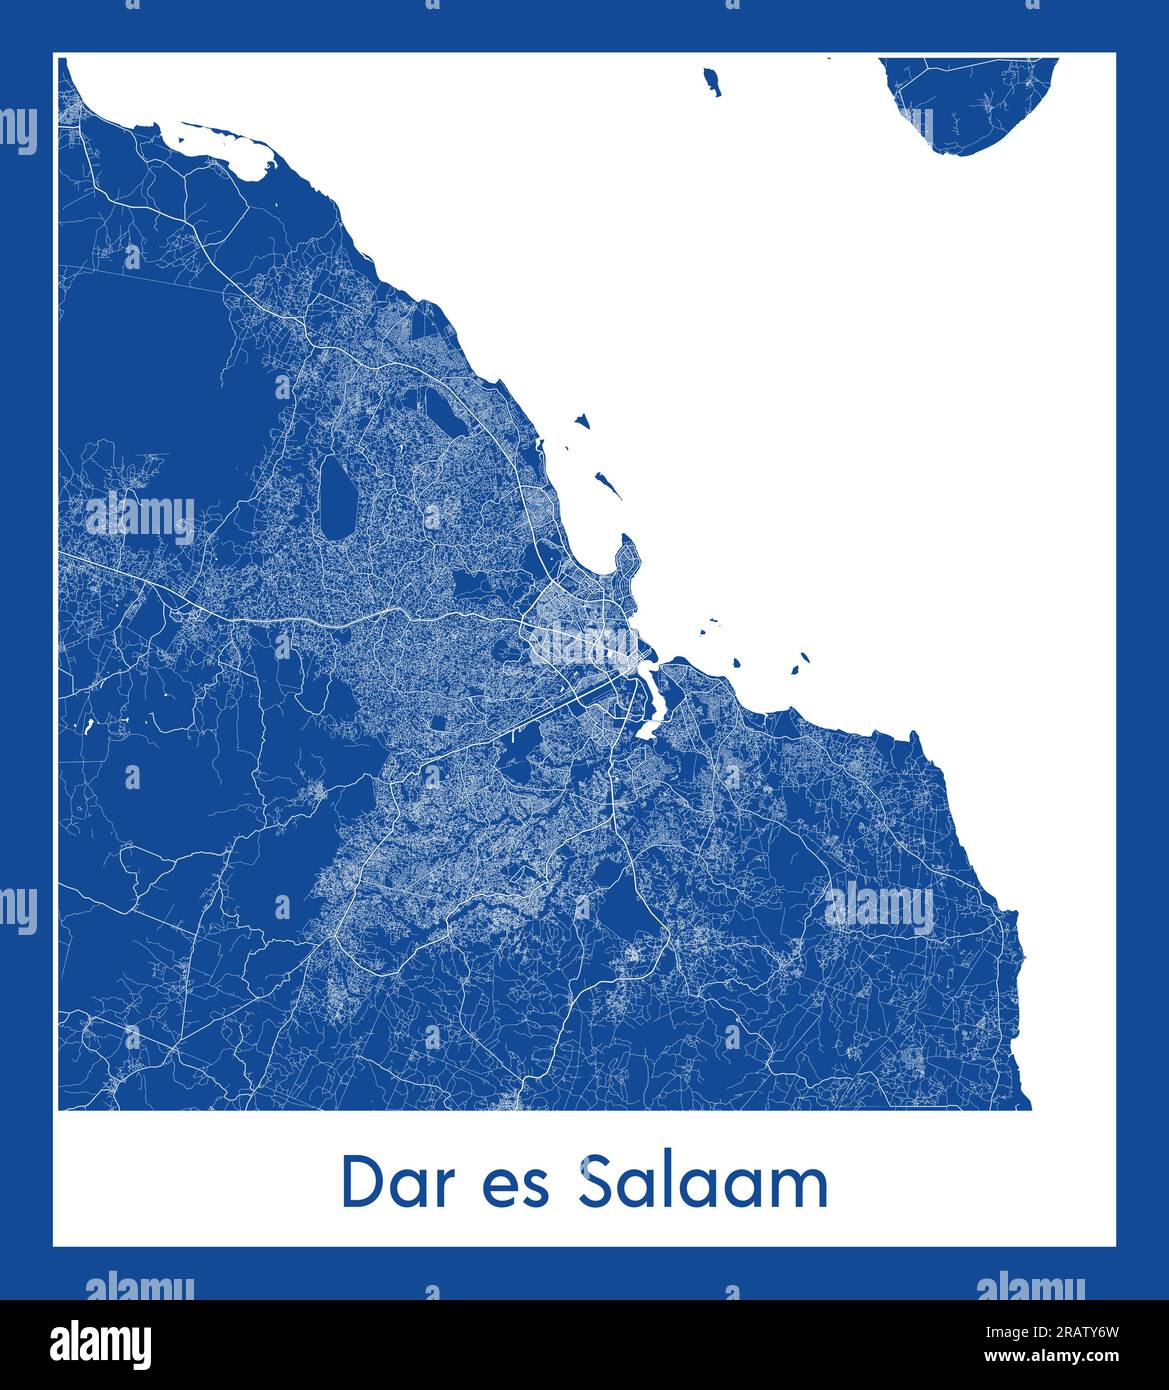 Dar es Salaam Tanzania Africa City map blue print vector illustration Stock Vector